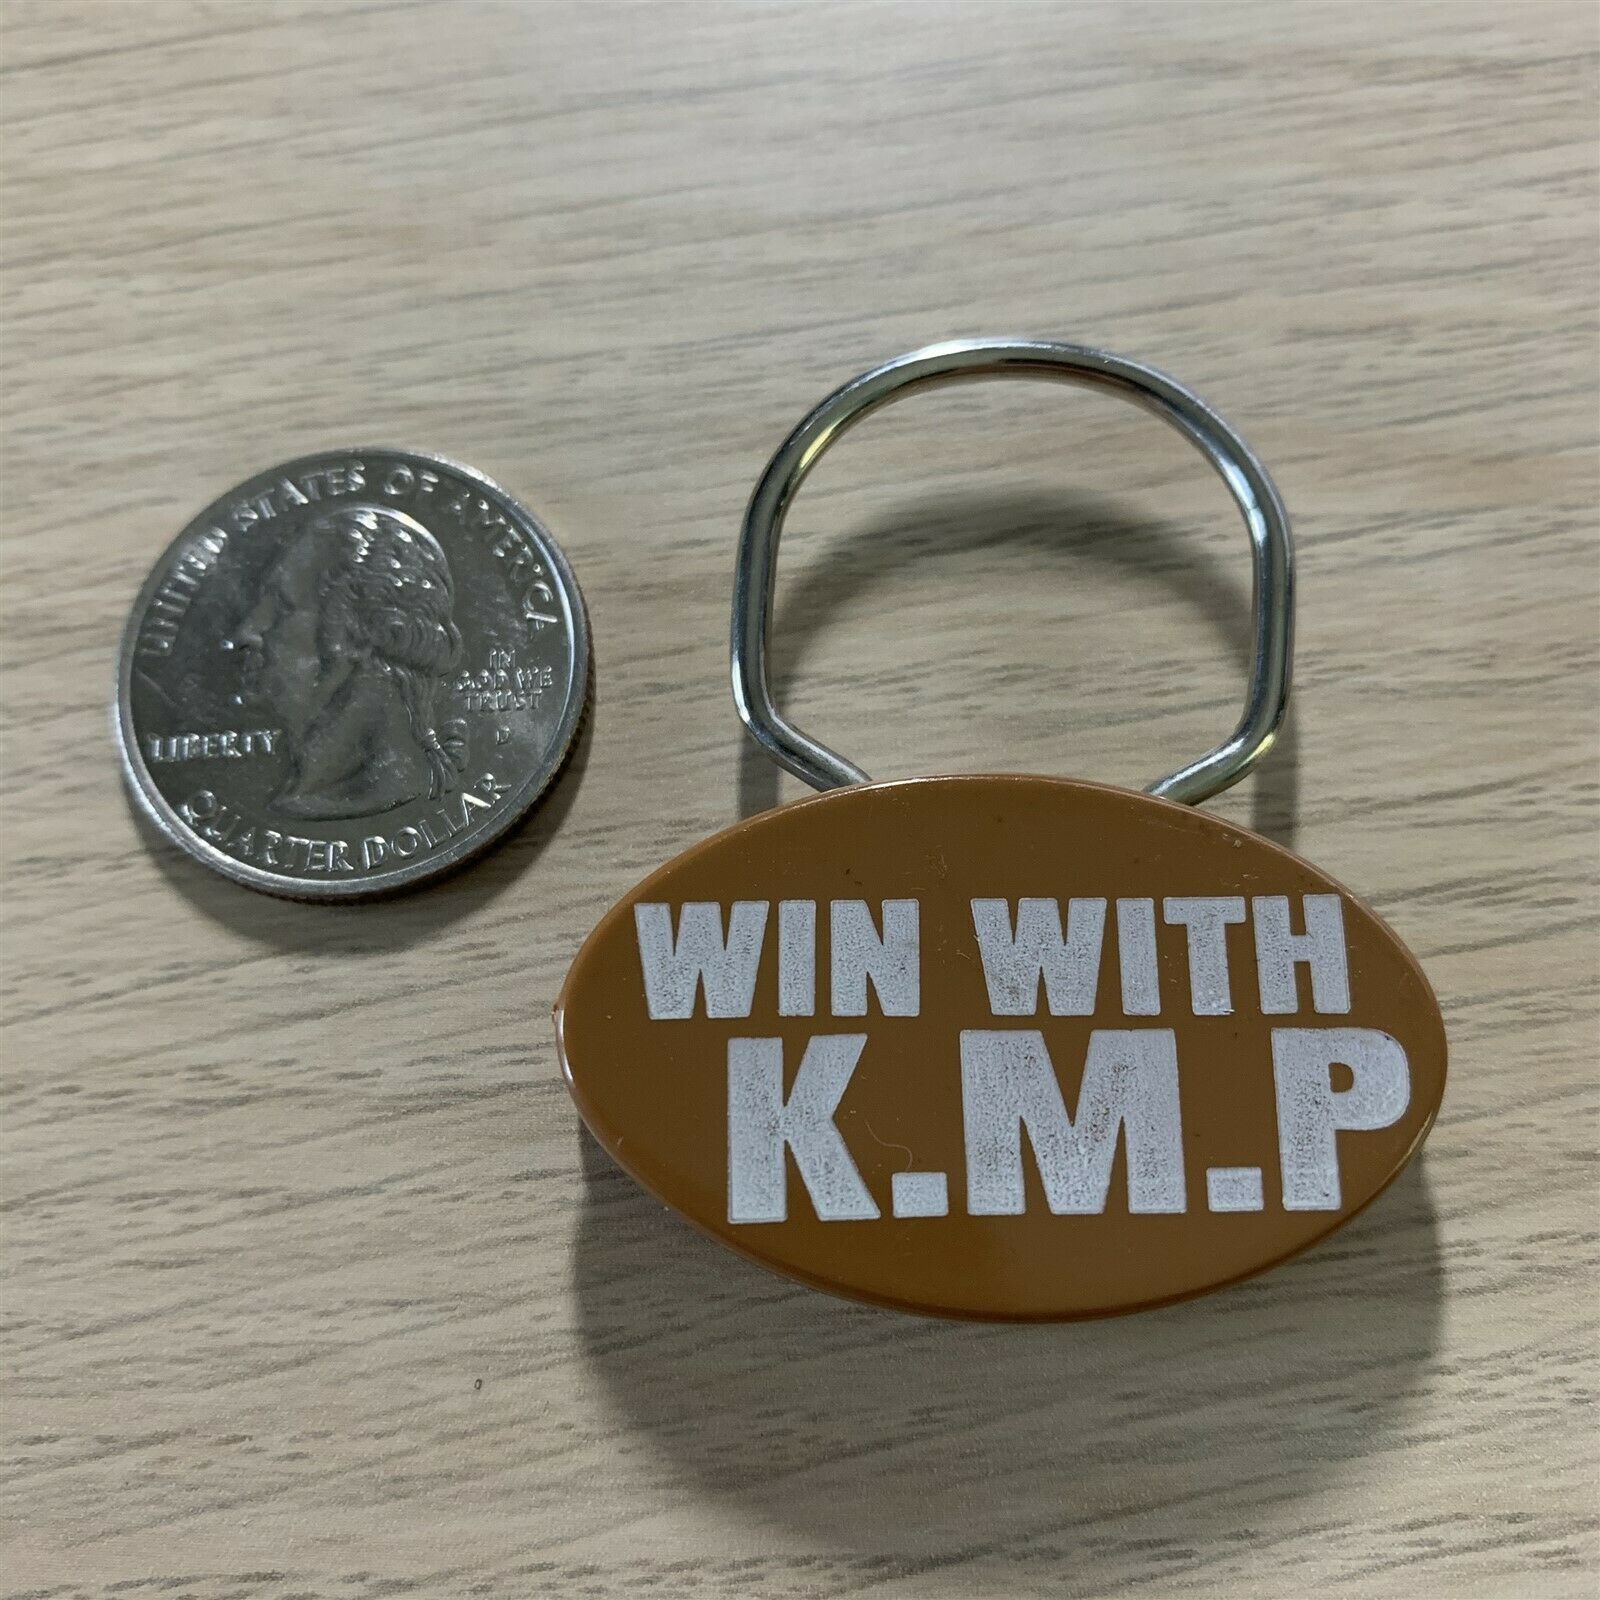 Kroger Grocery Store KMP Kroger Manufacturing Plant Football Keychain Key Ring